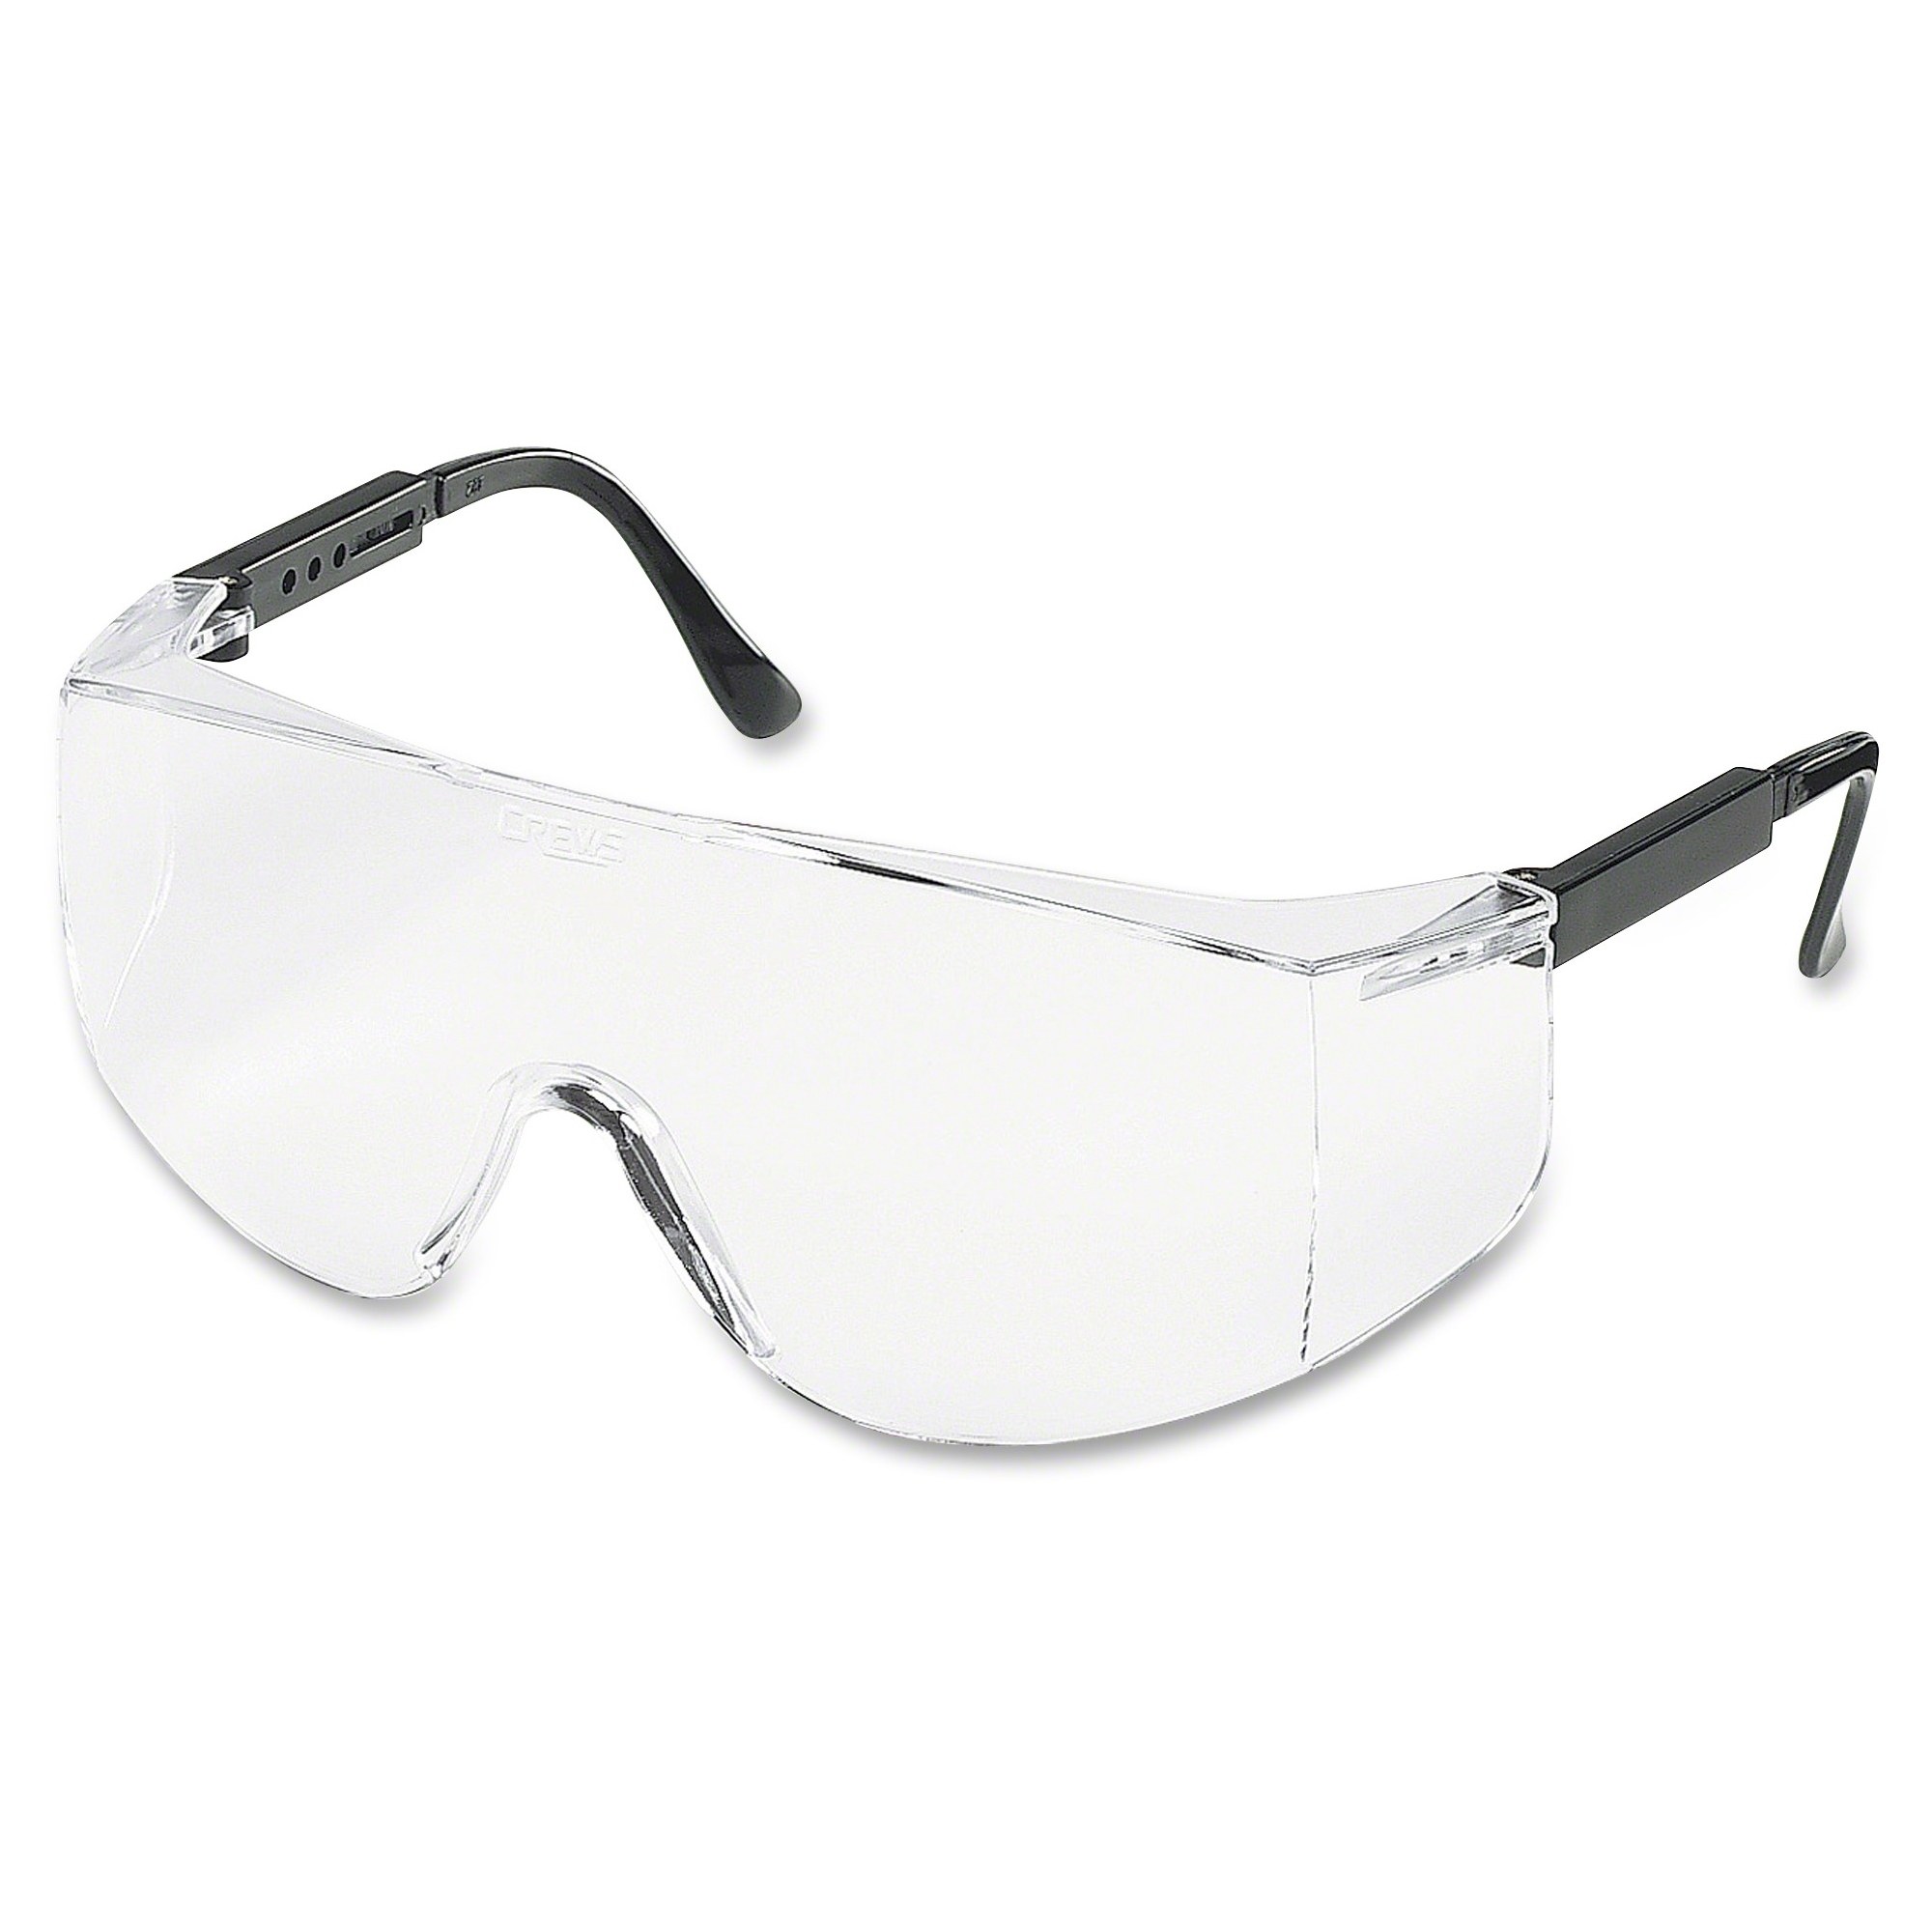 Tacoma Lightweight Safety Glasses Wrap-Around TC110 - image 2 of 2